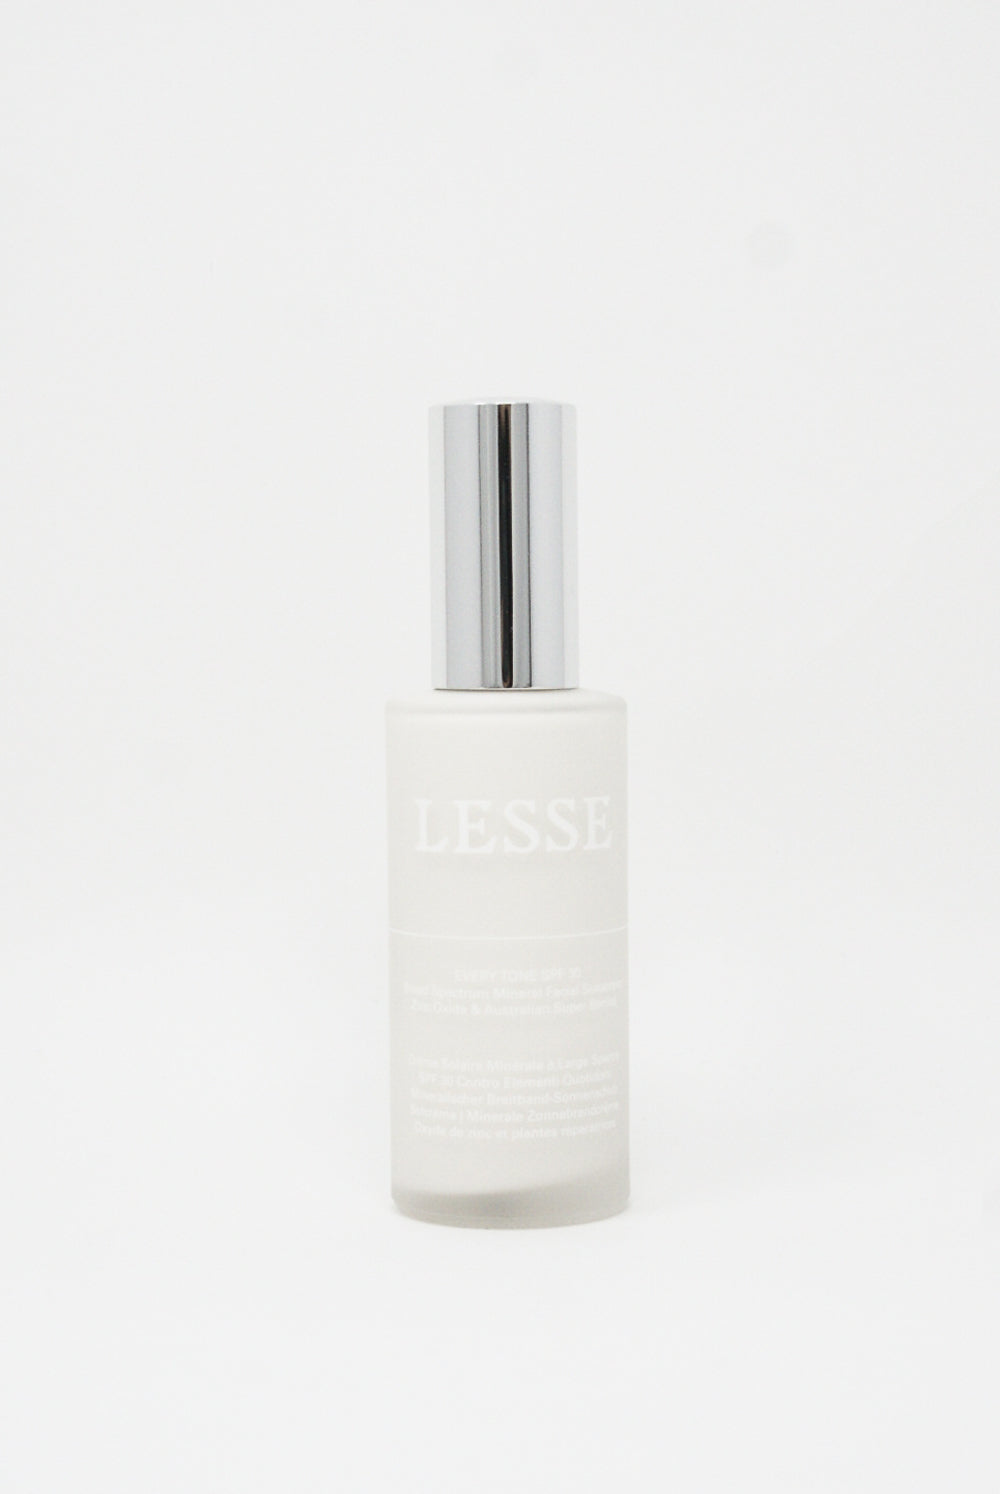 Lesse - Every tone SPF 30 Sunscreen -  2 fl oz/60 ml